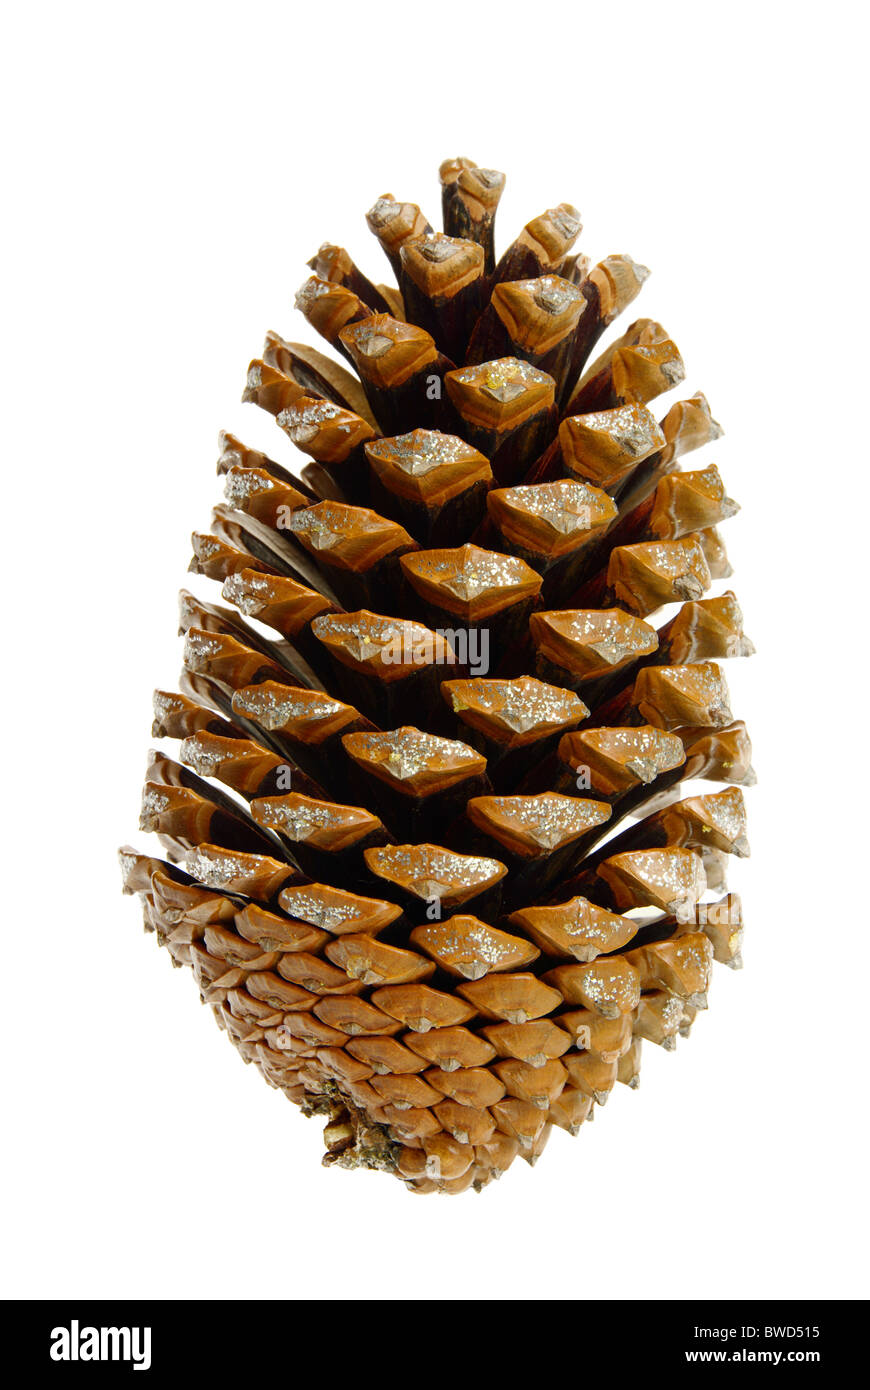 Pinienzapfen - pine cone 04 Stock Photo